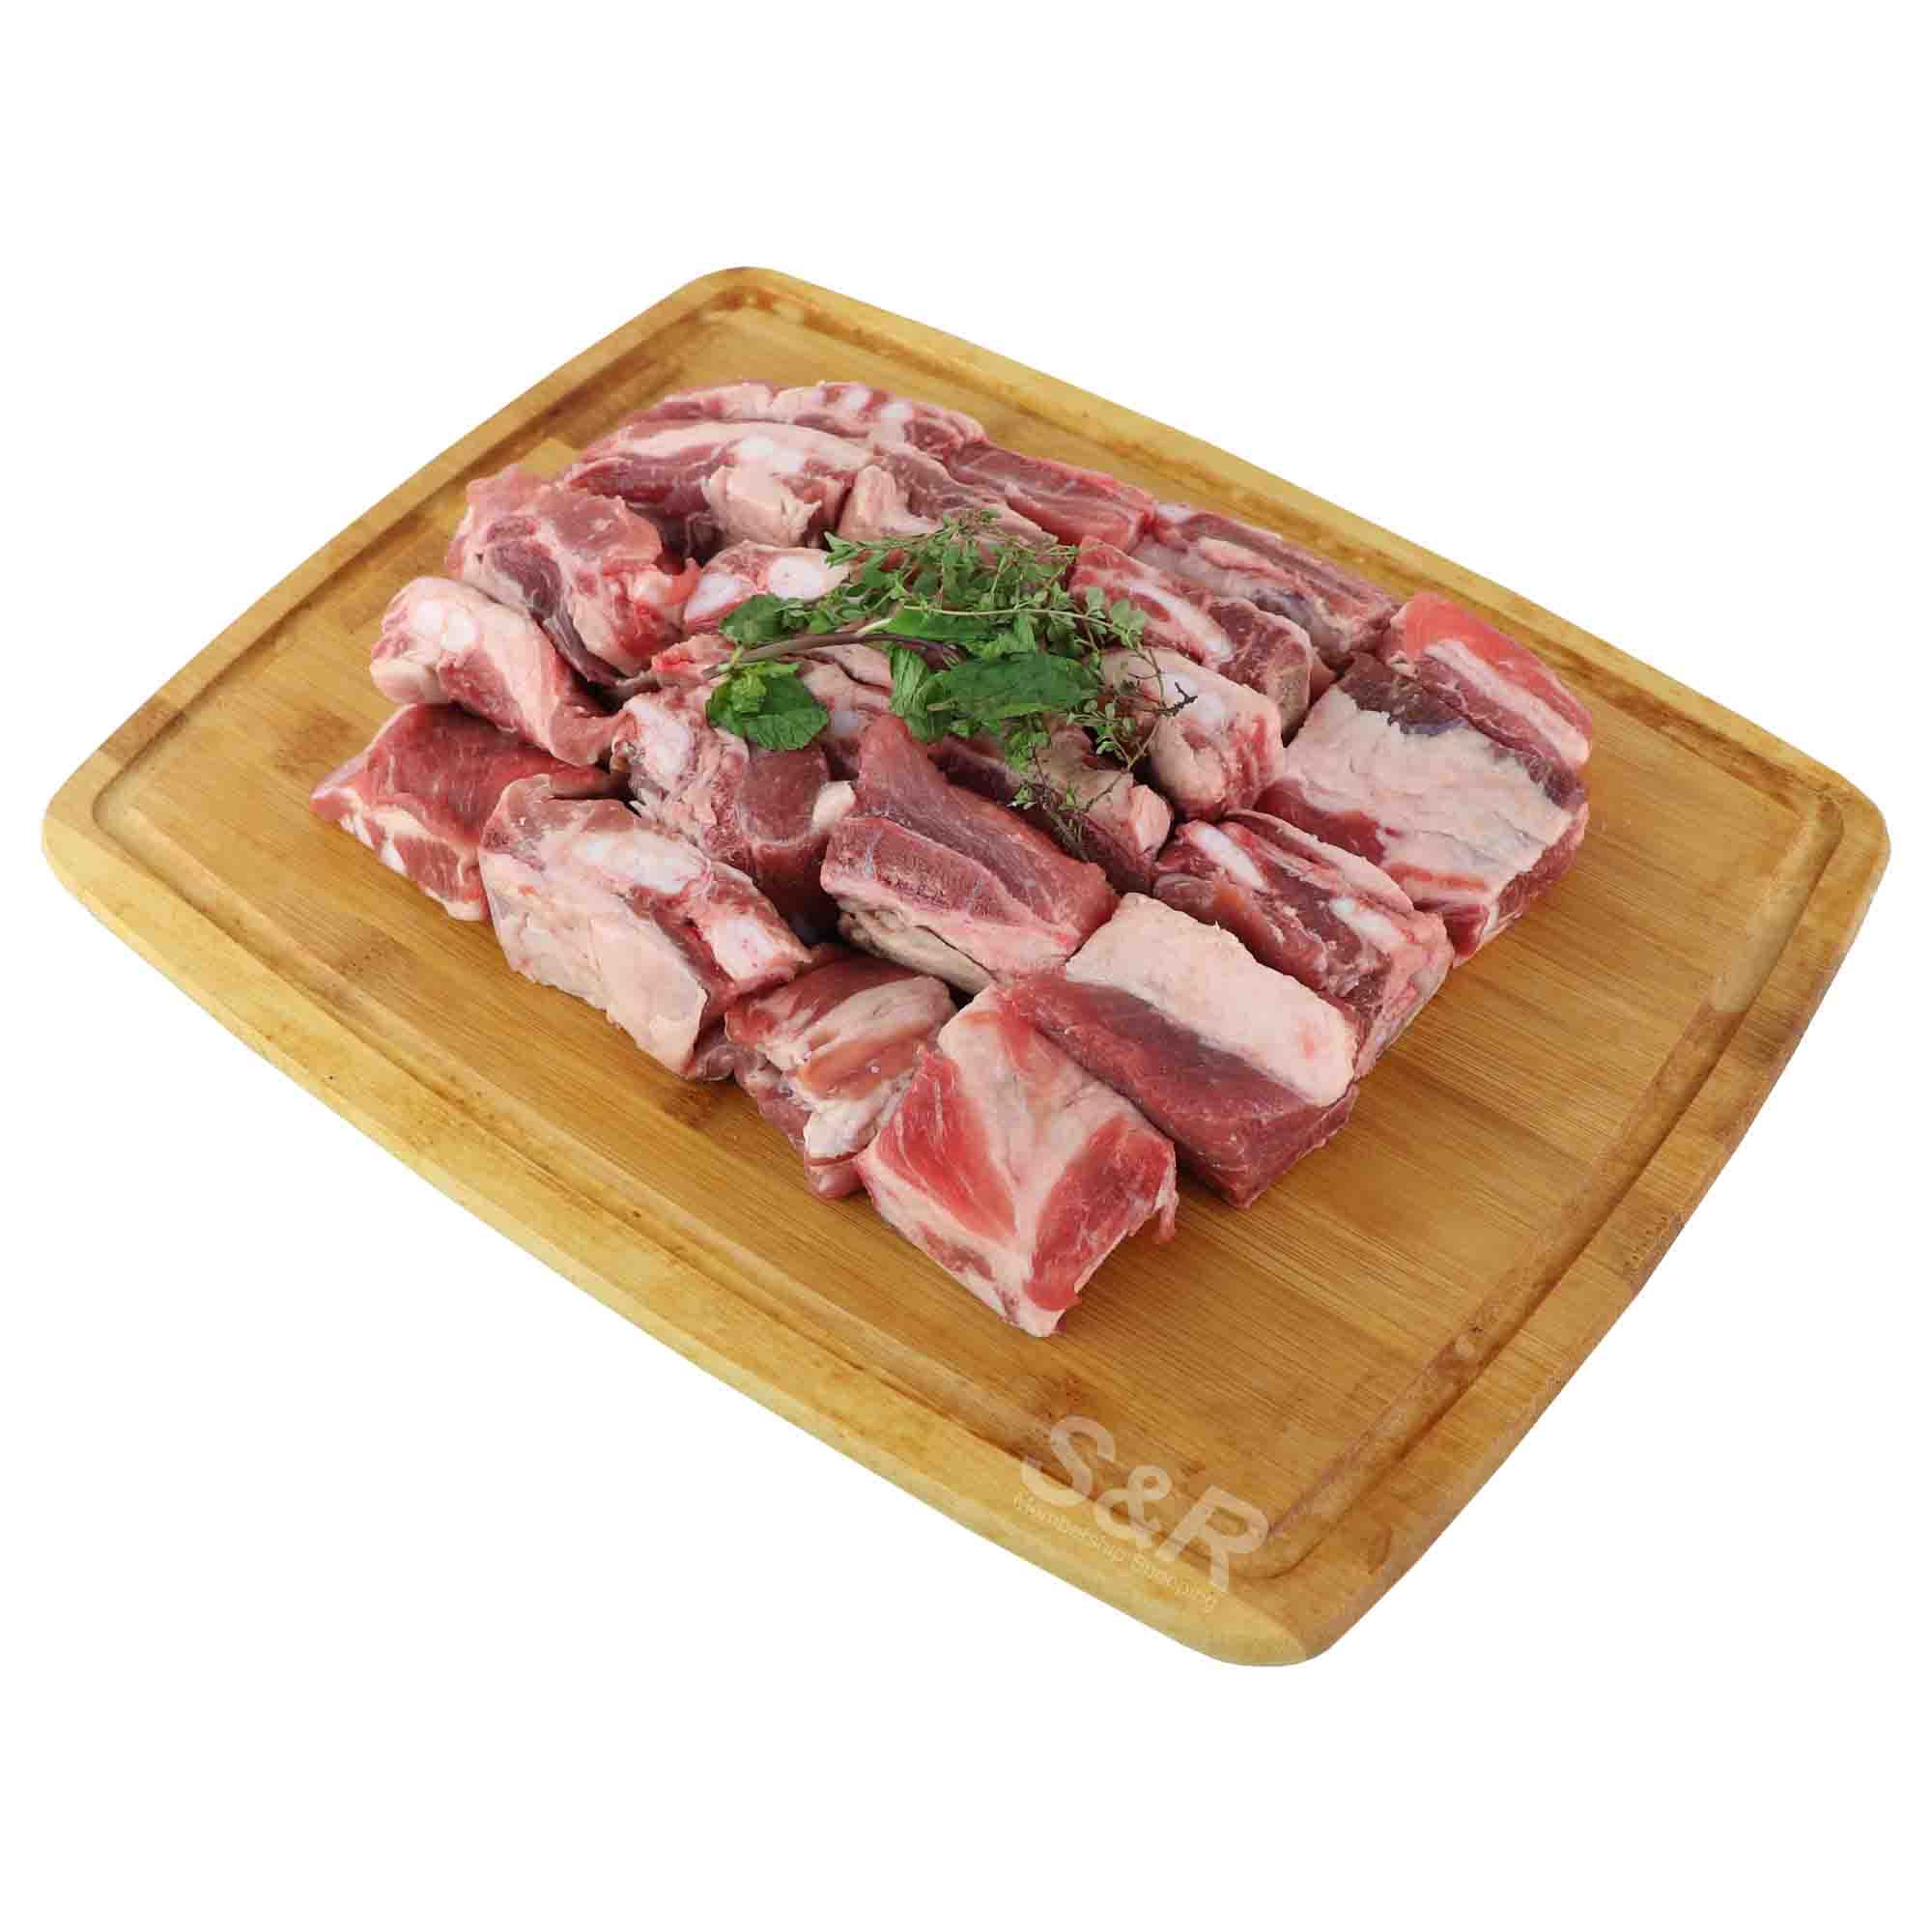 Members' Value Pork Spare Ribs Steak approx. 2kg